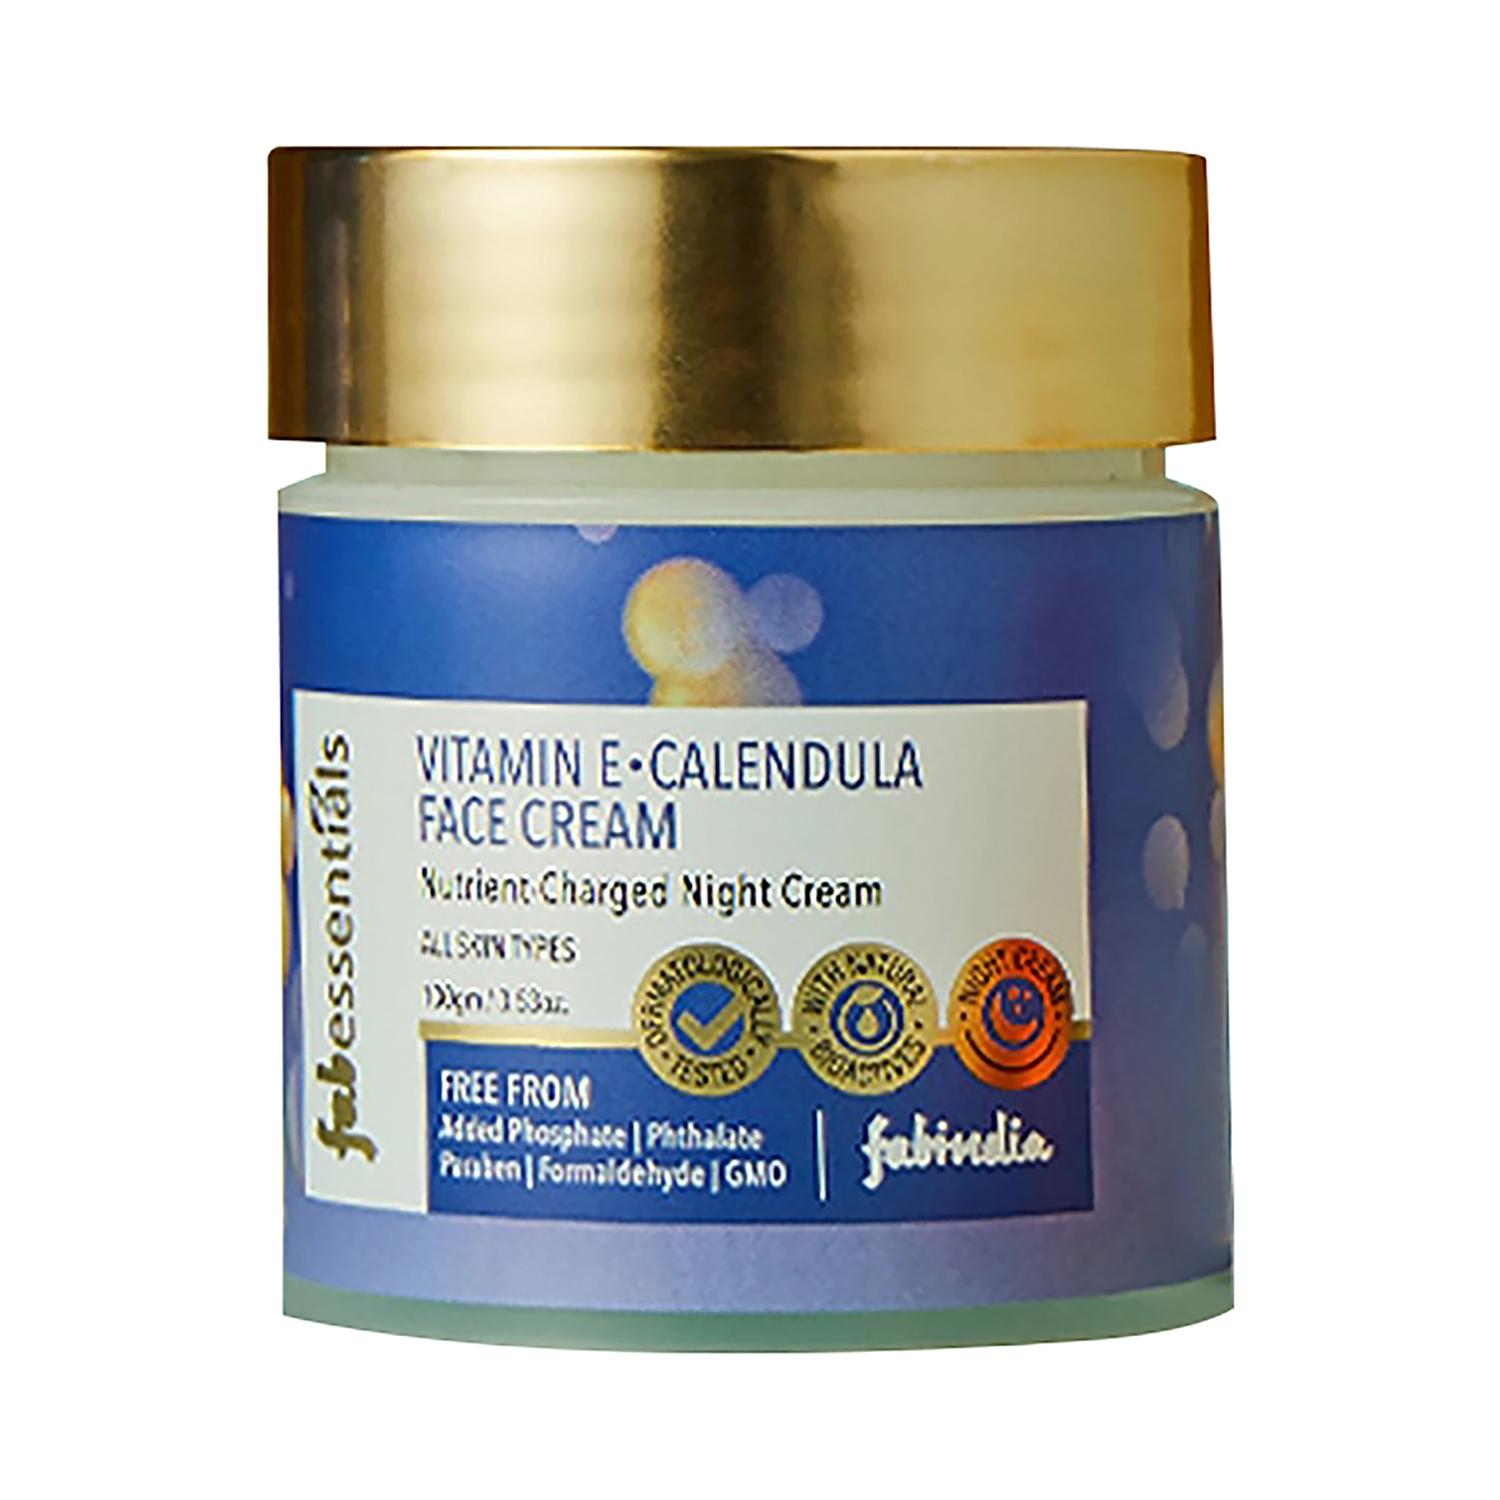 fabessentials vitamin e calendula face cream (50g)